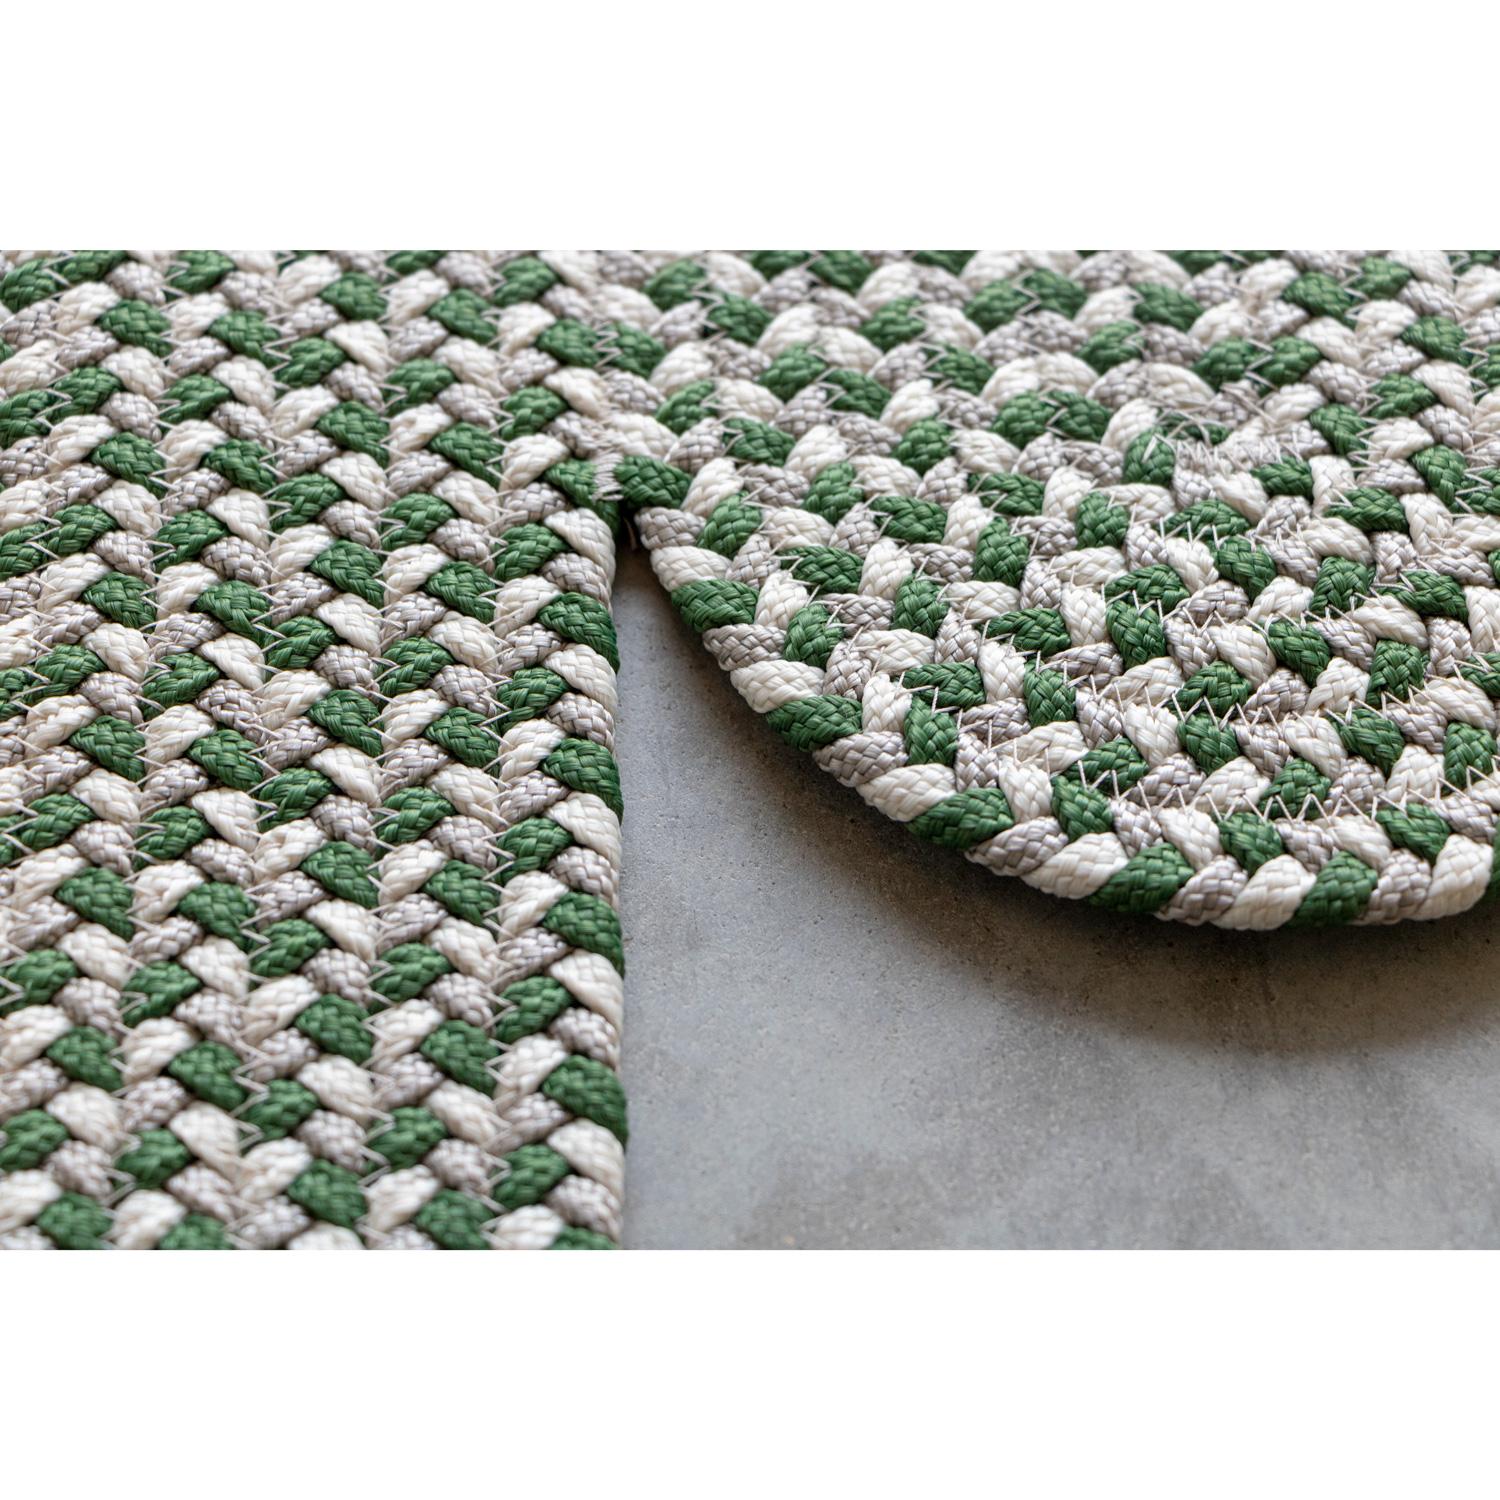 Indian Tappeto indoor outdoor verde design italiano Deanna Comellini 244x305 cm For Sale